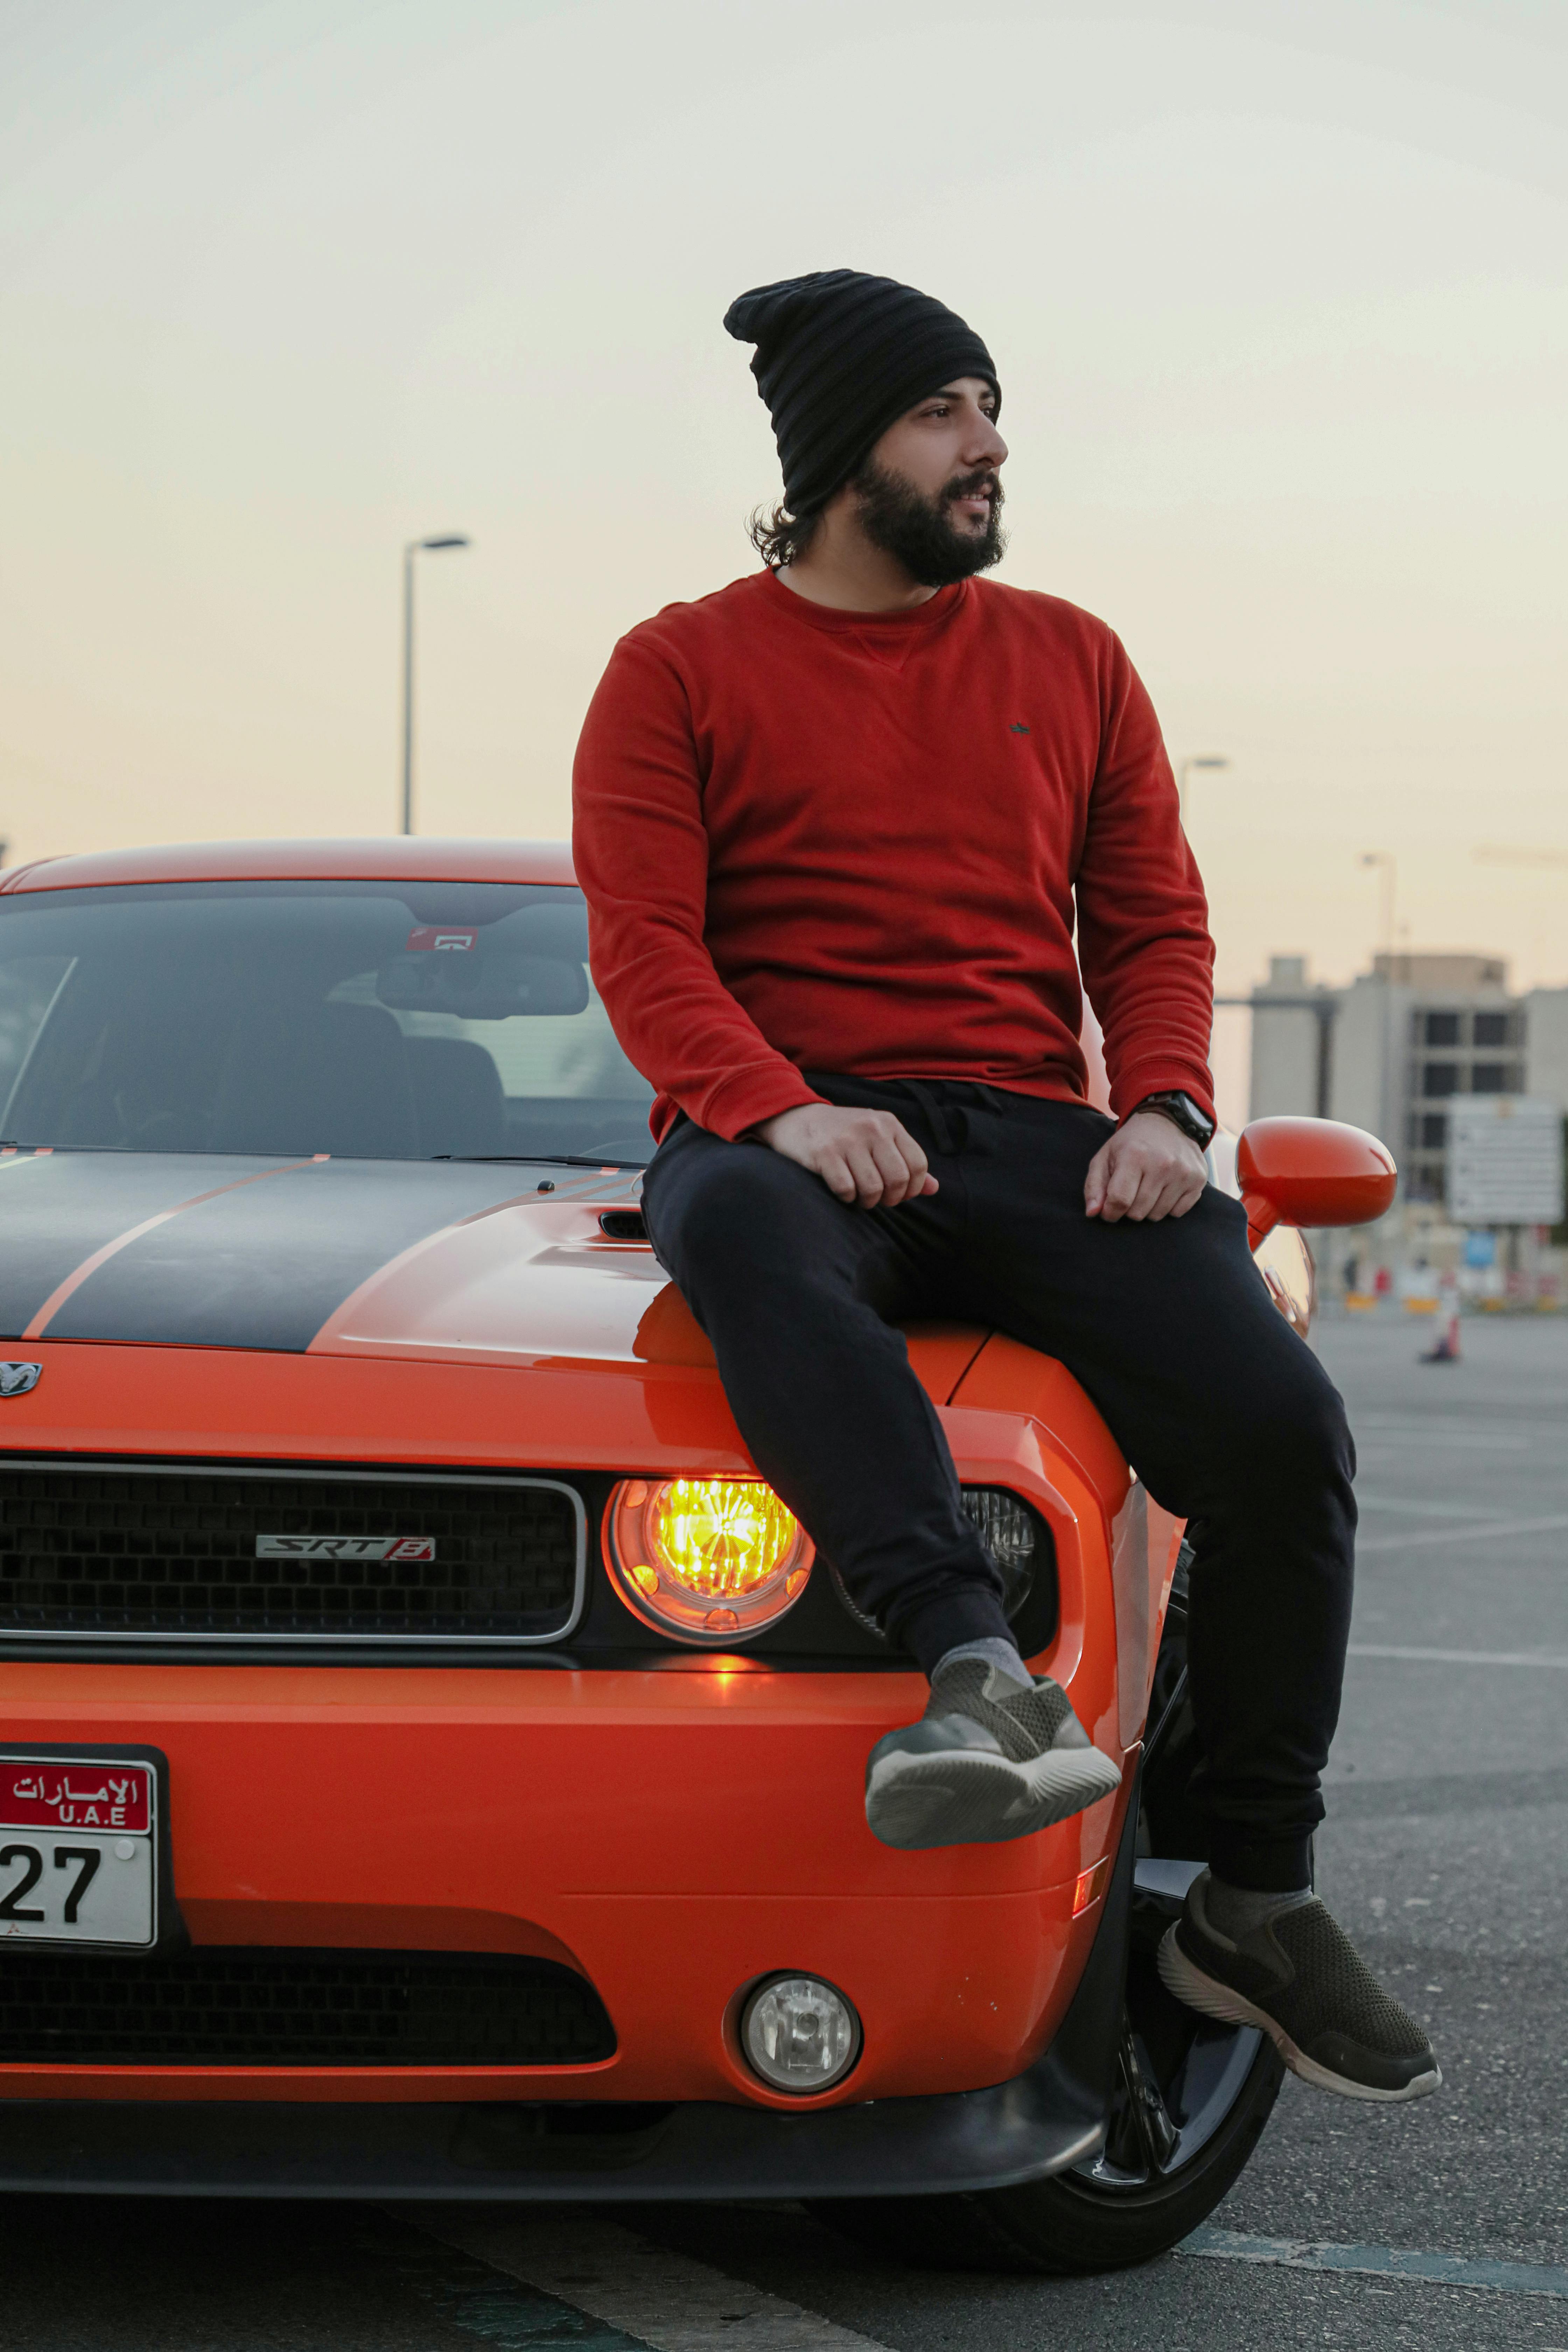 Pose with car | Gym guys, Photoshoot poses, Fashion poses